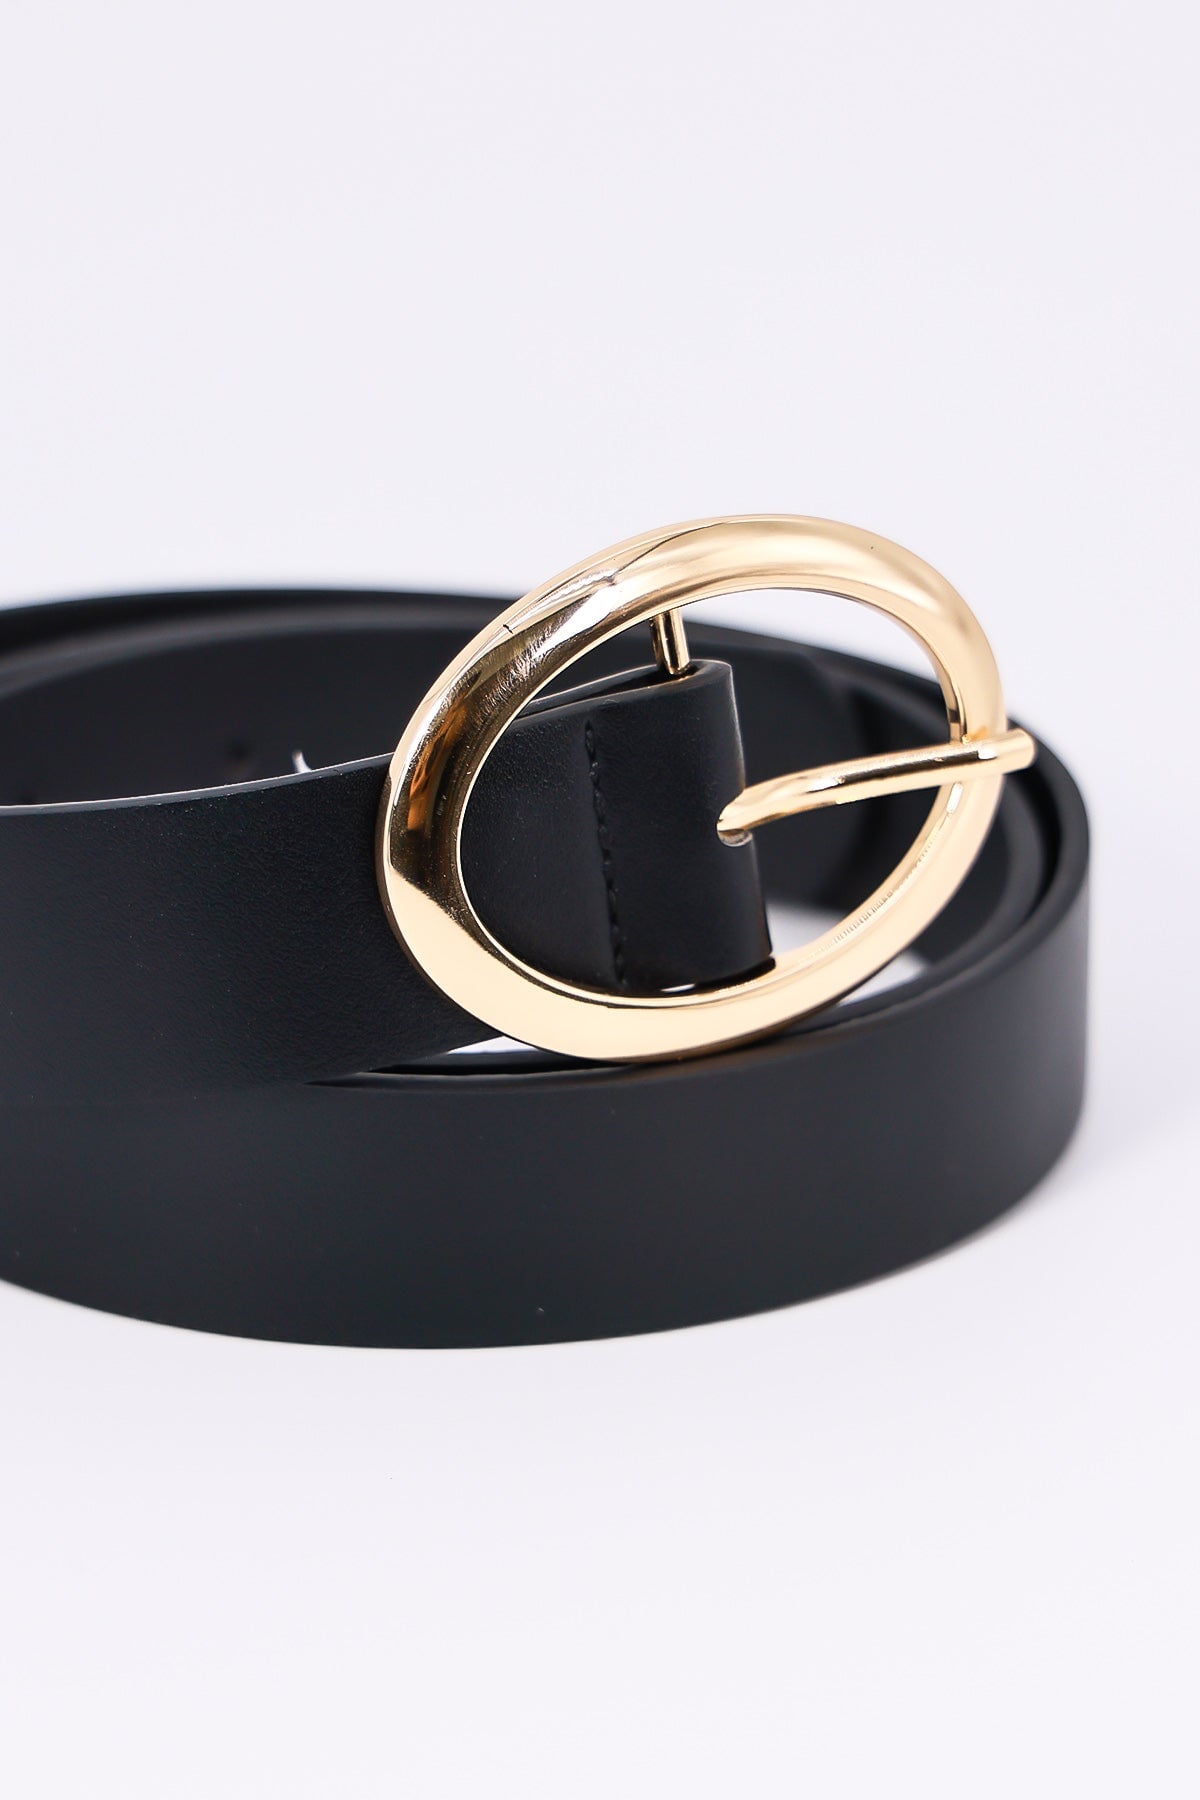 Oval Ring Belt in S/M | Ladies Fashion Belts | Carraig Donn